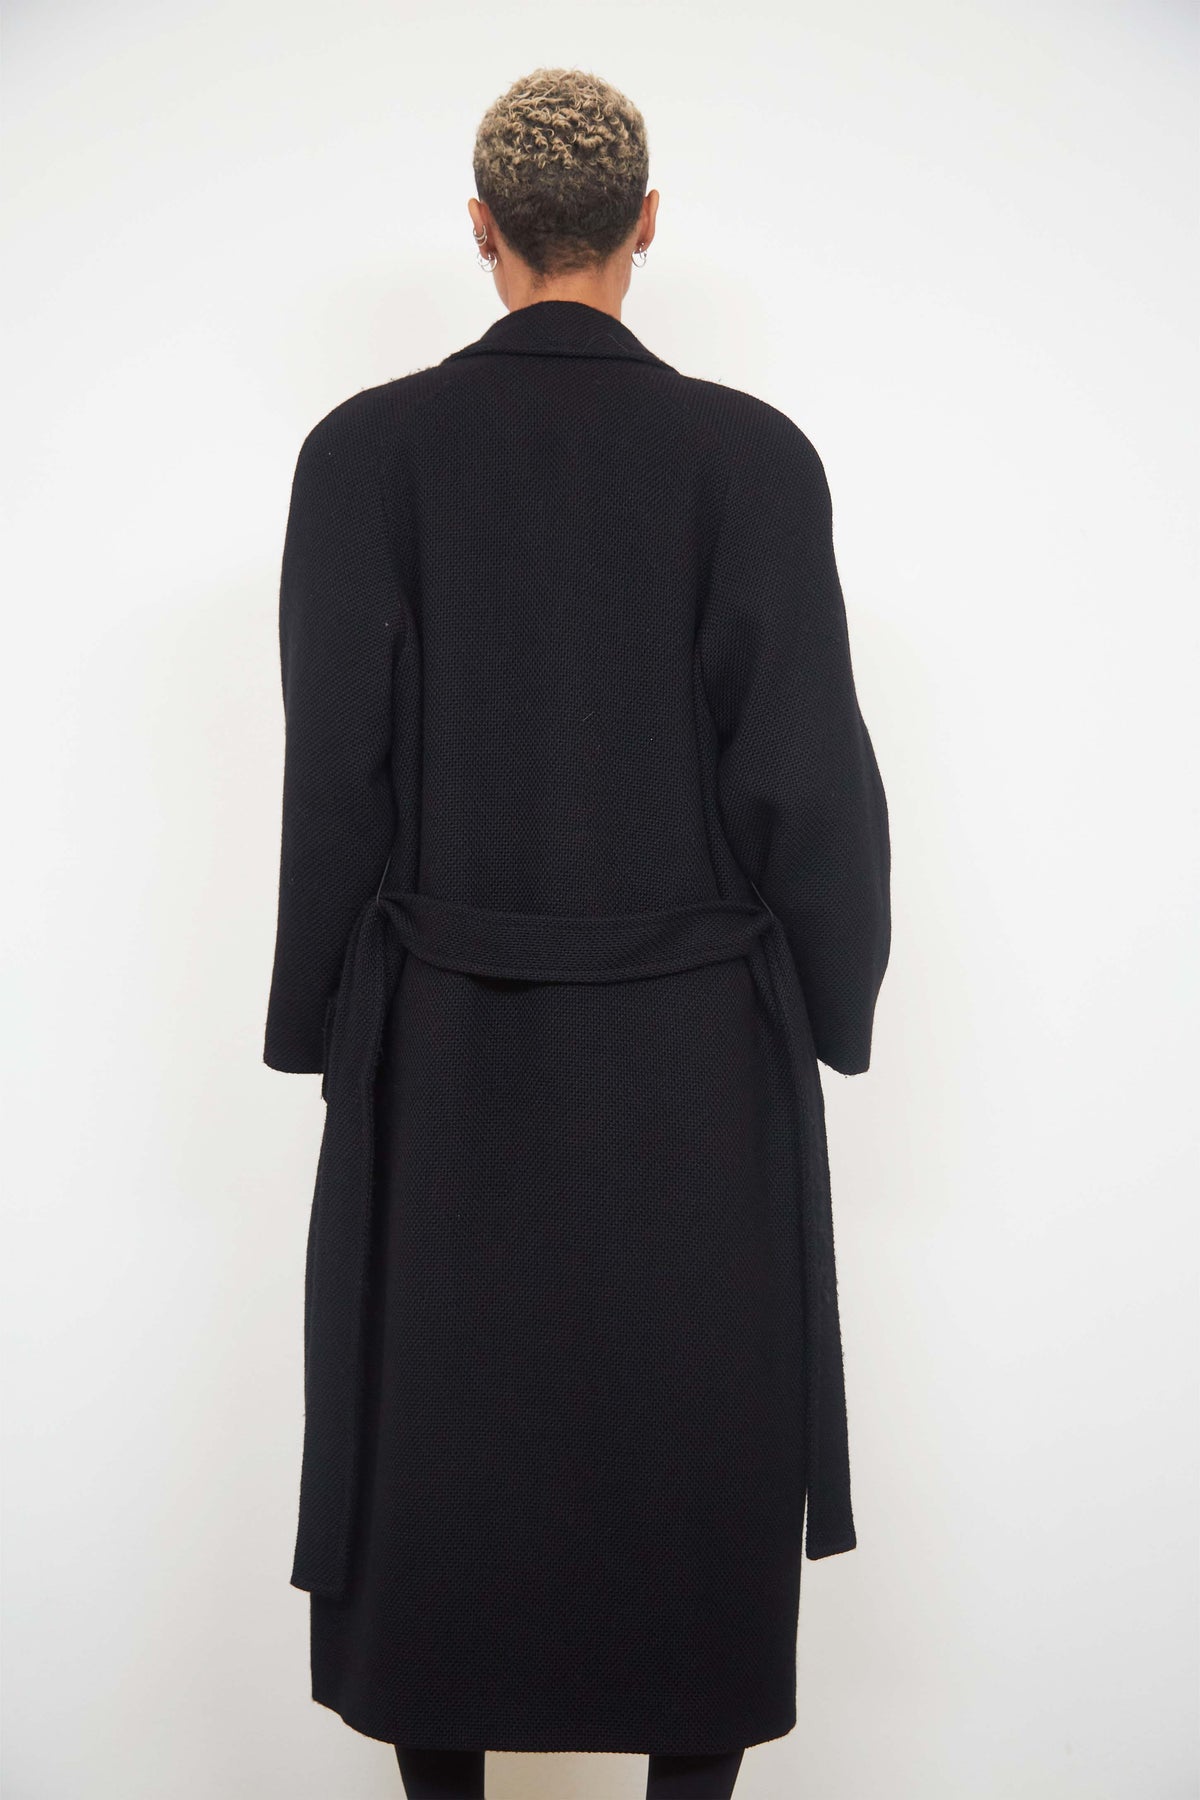 Christian Lacroix coat